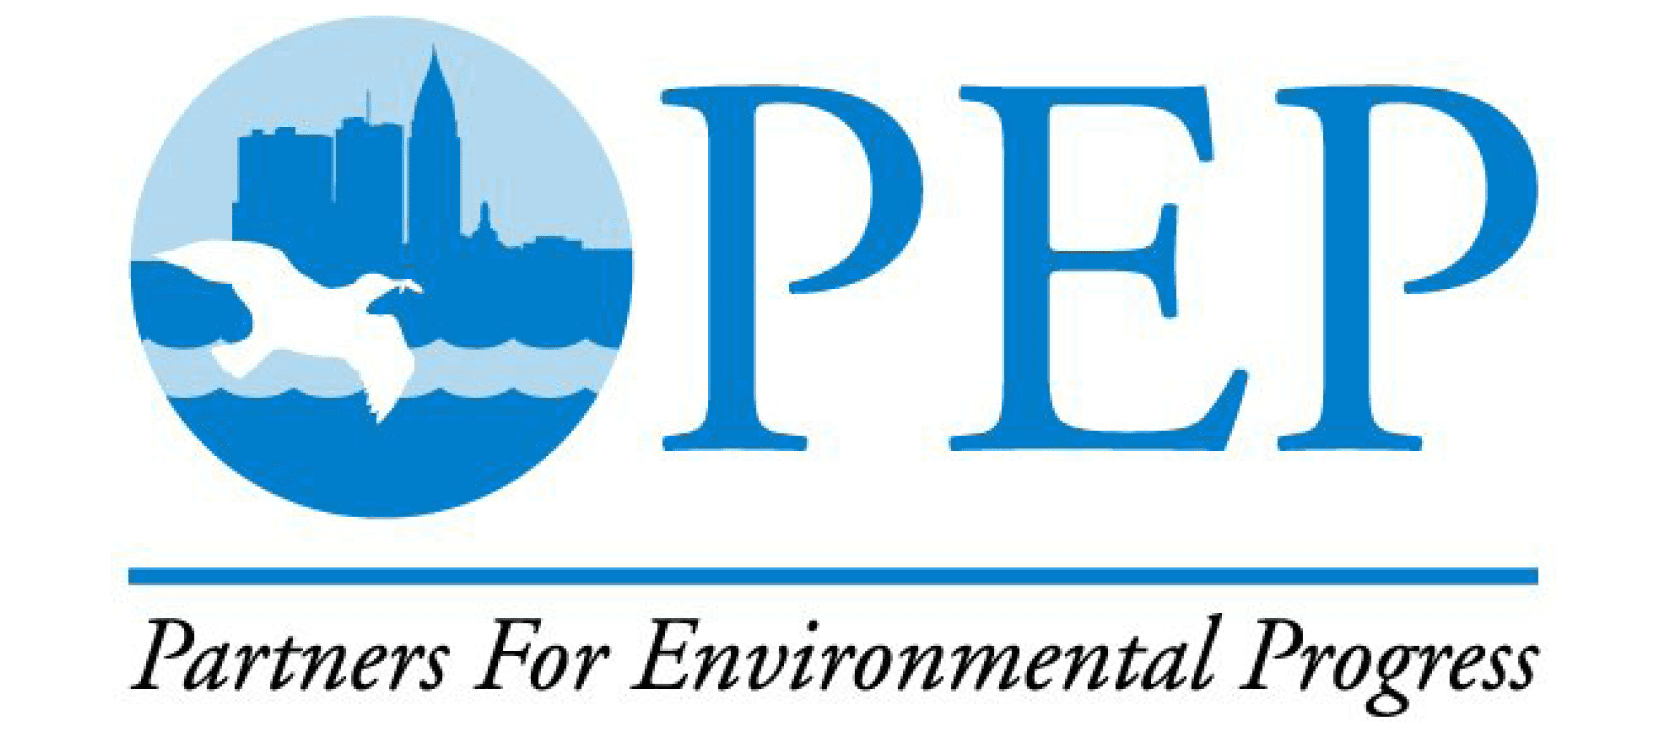 Cypress Employment Partners For Environmental Progress Affiliate